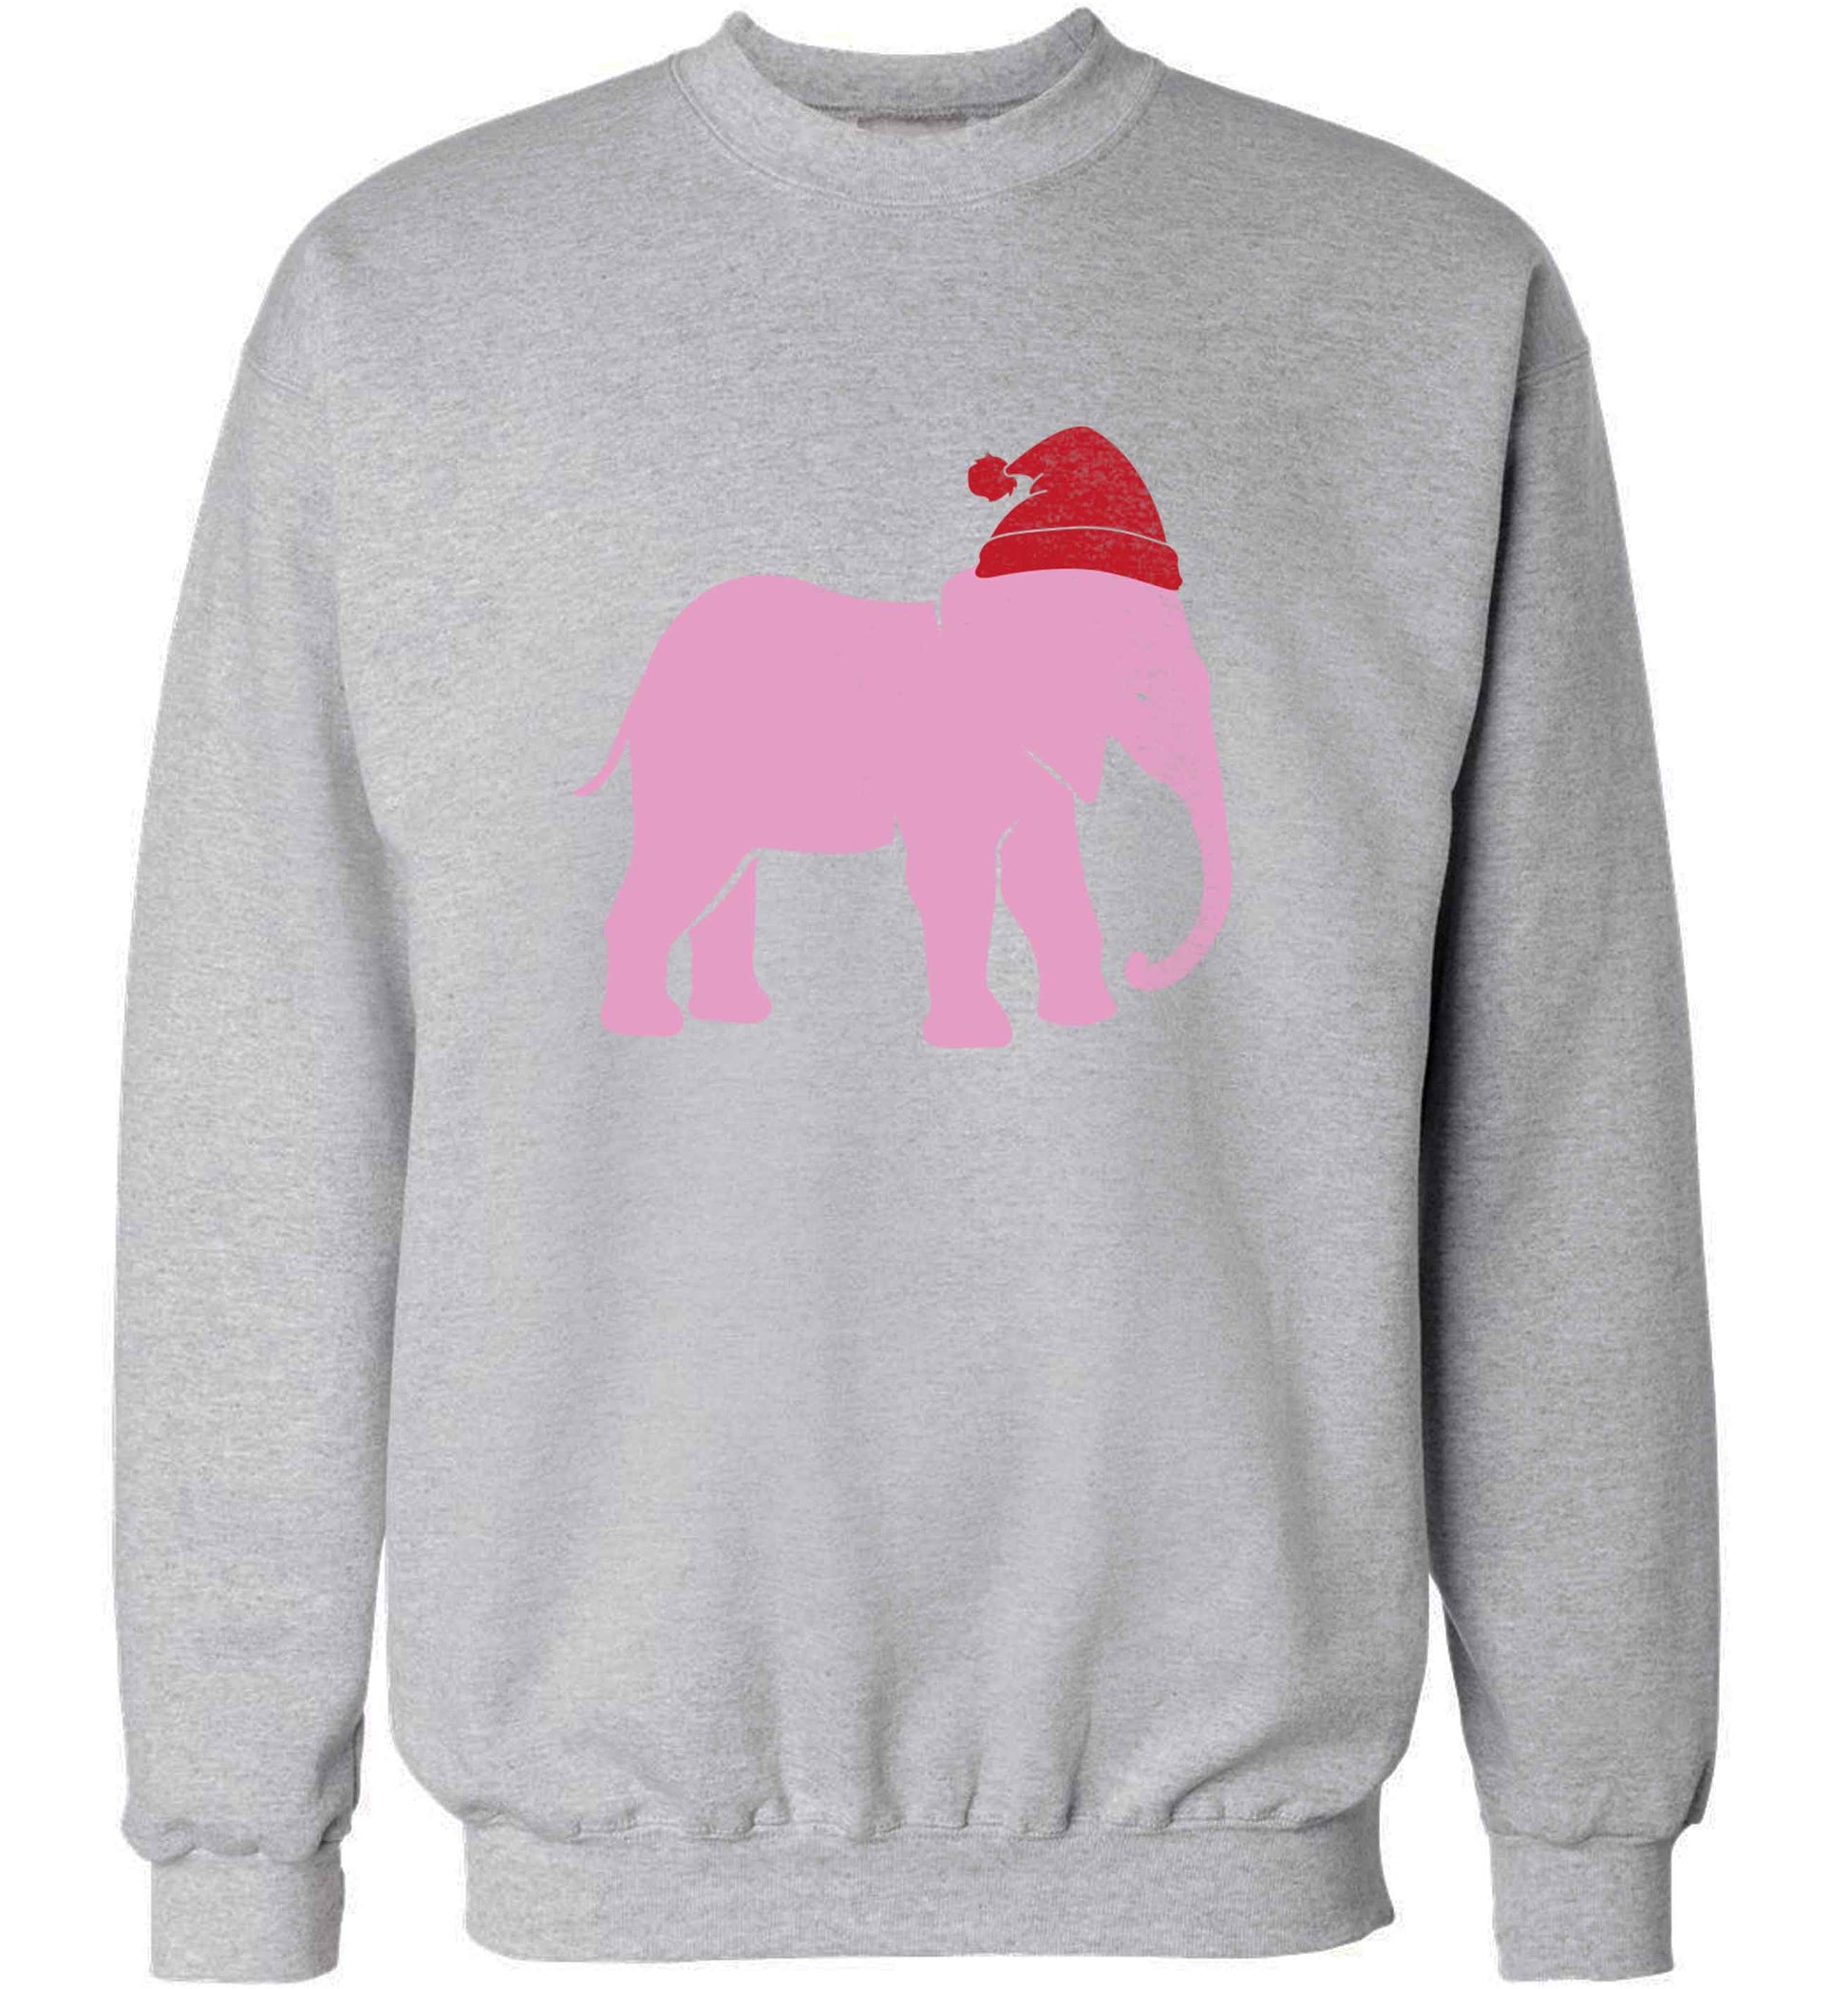 Pink elephant Santa adult's unisex grey sweater 2XL